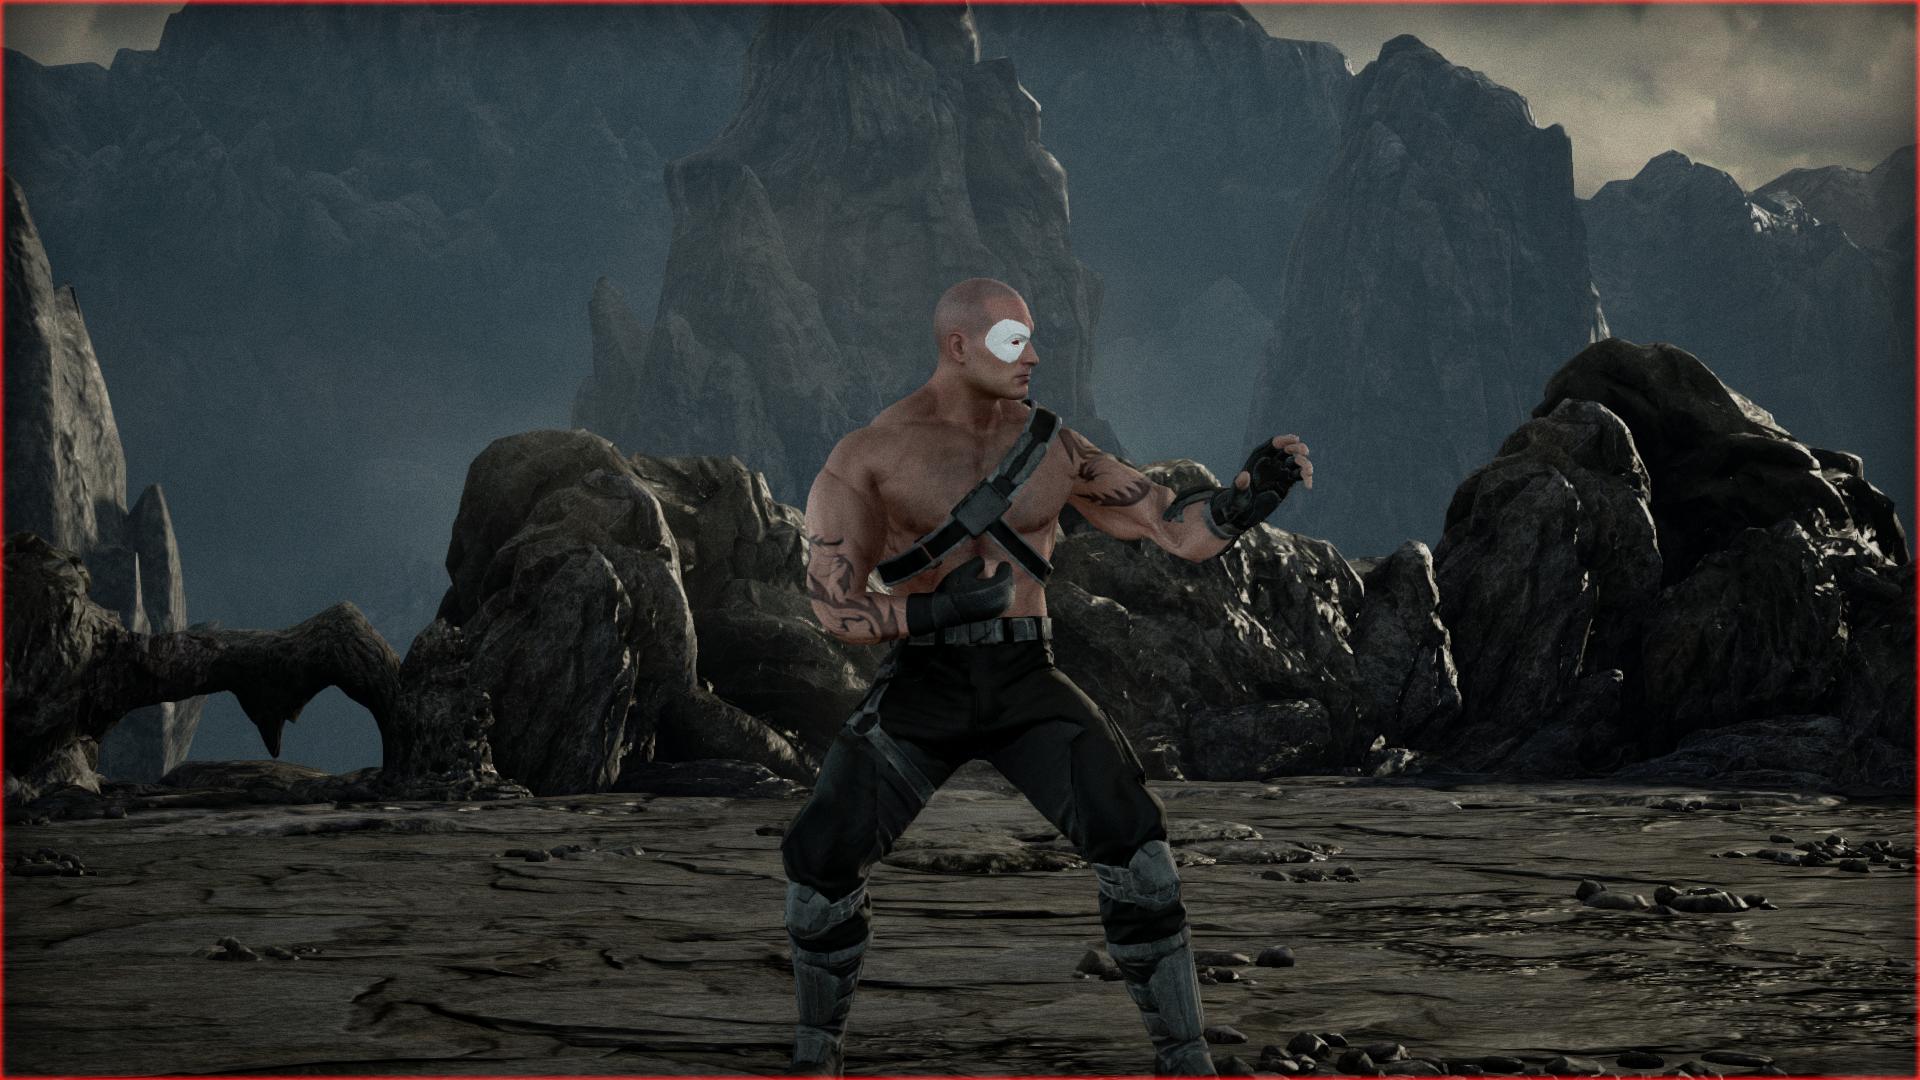 Street Fighter V PC mods - Kano (Mortal Kombat) 